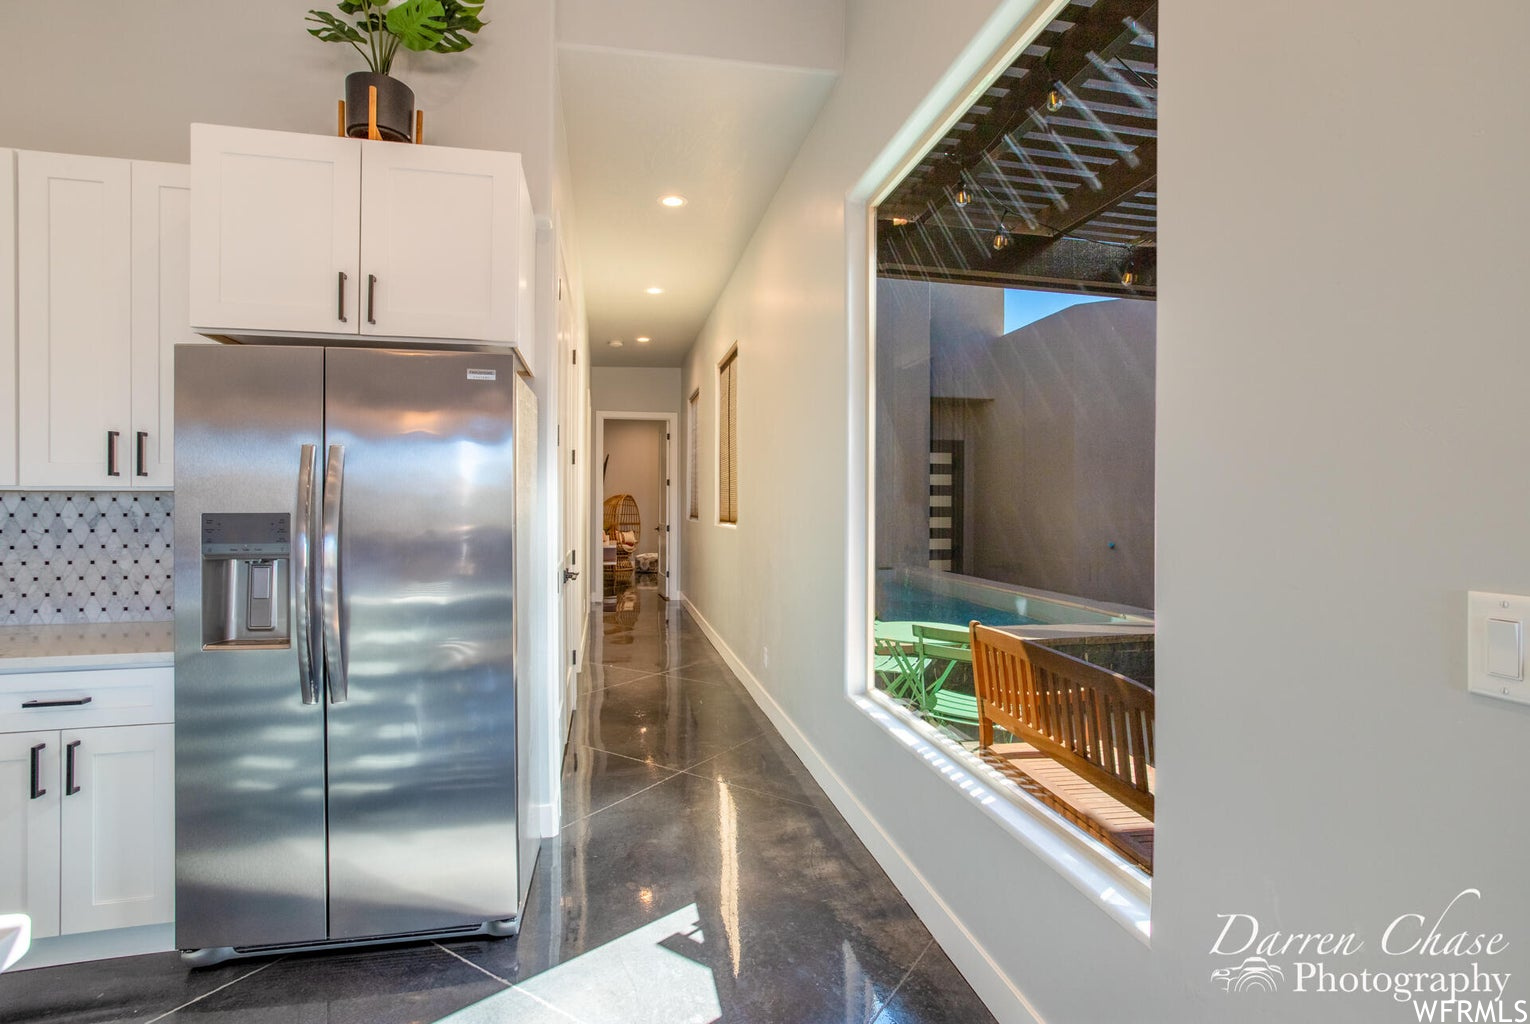 Kitchen featuring refrigerator, white cabinets, and dark floors